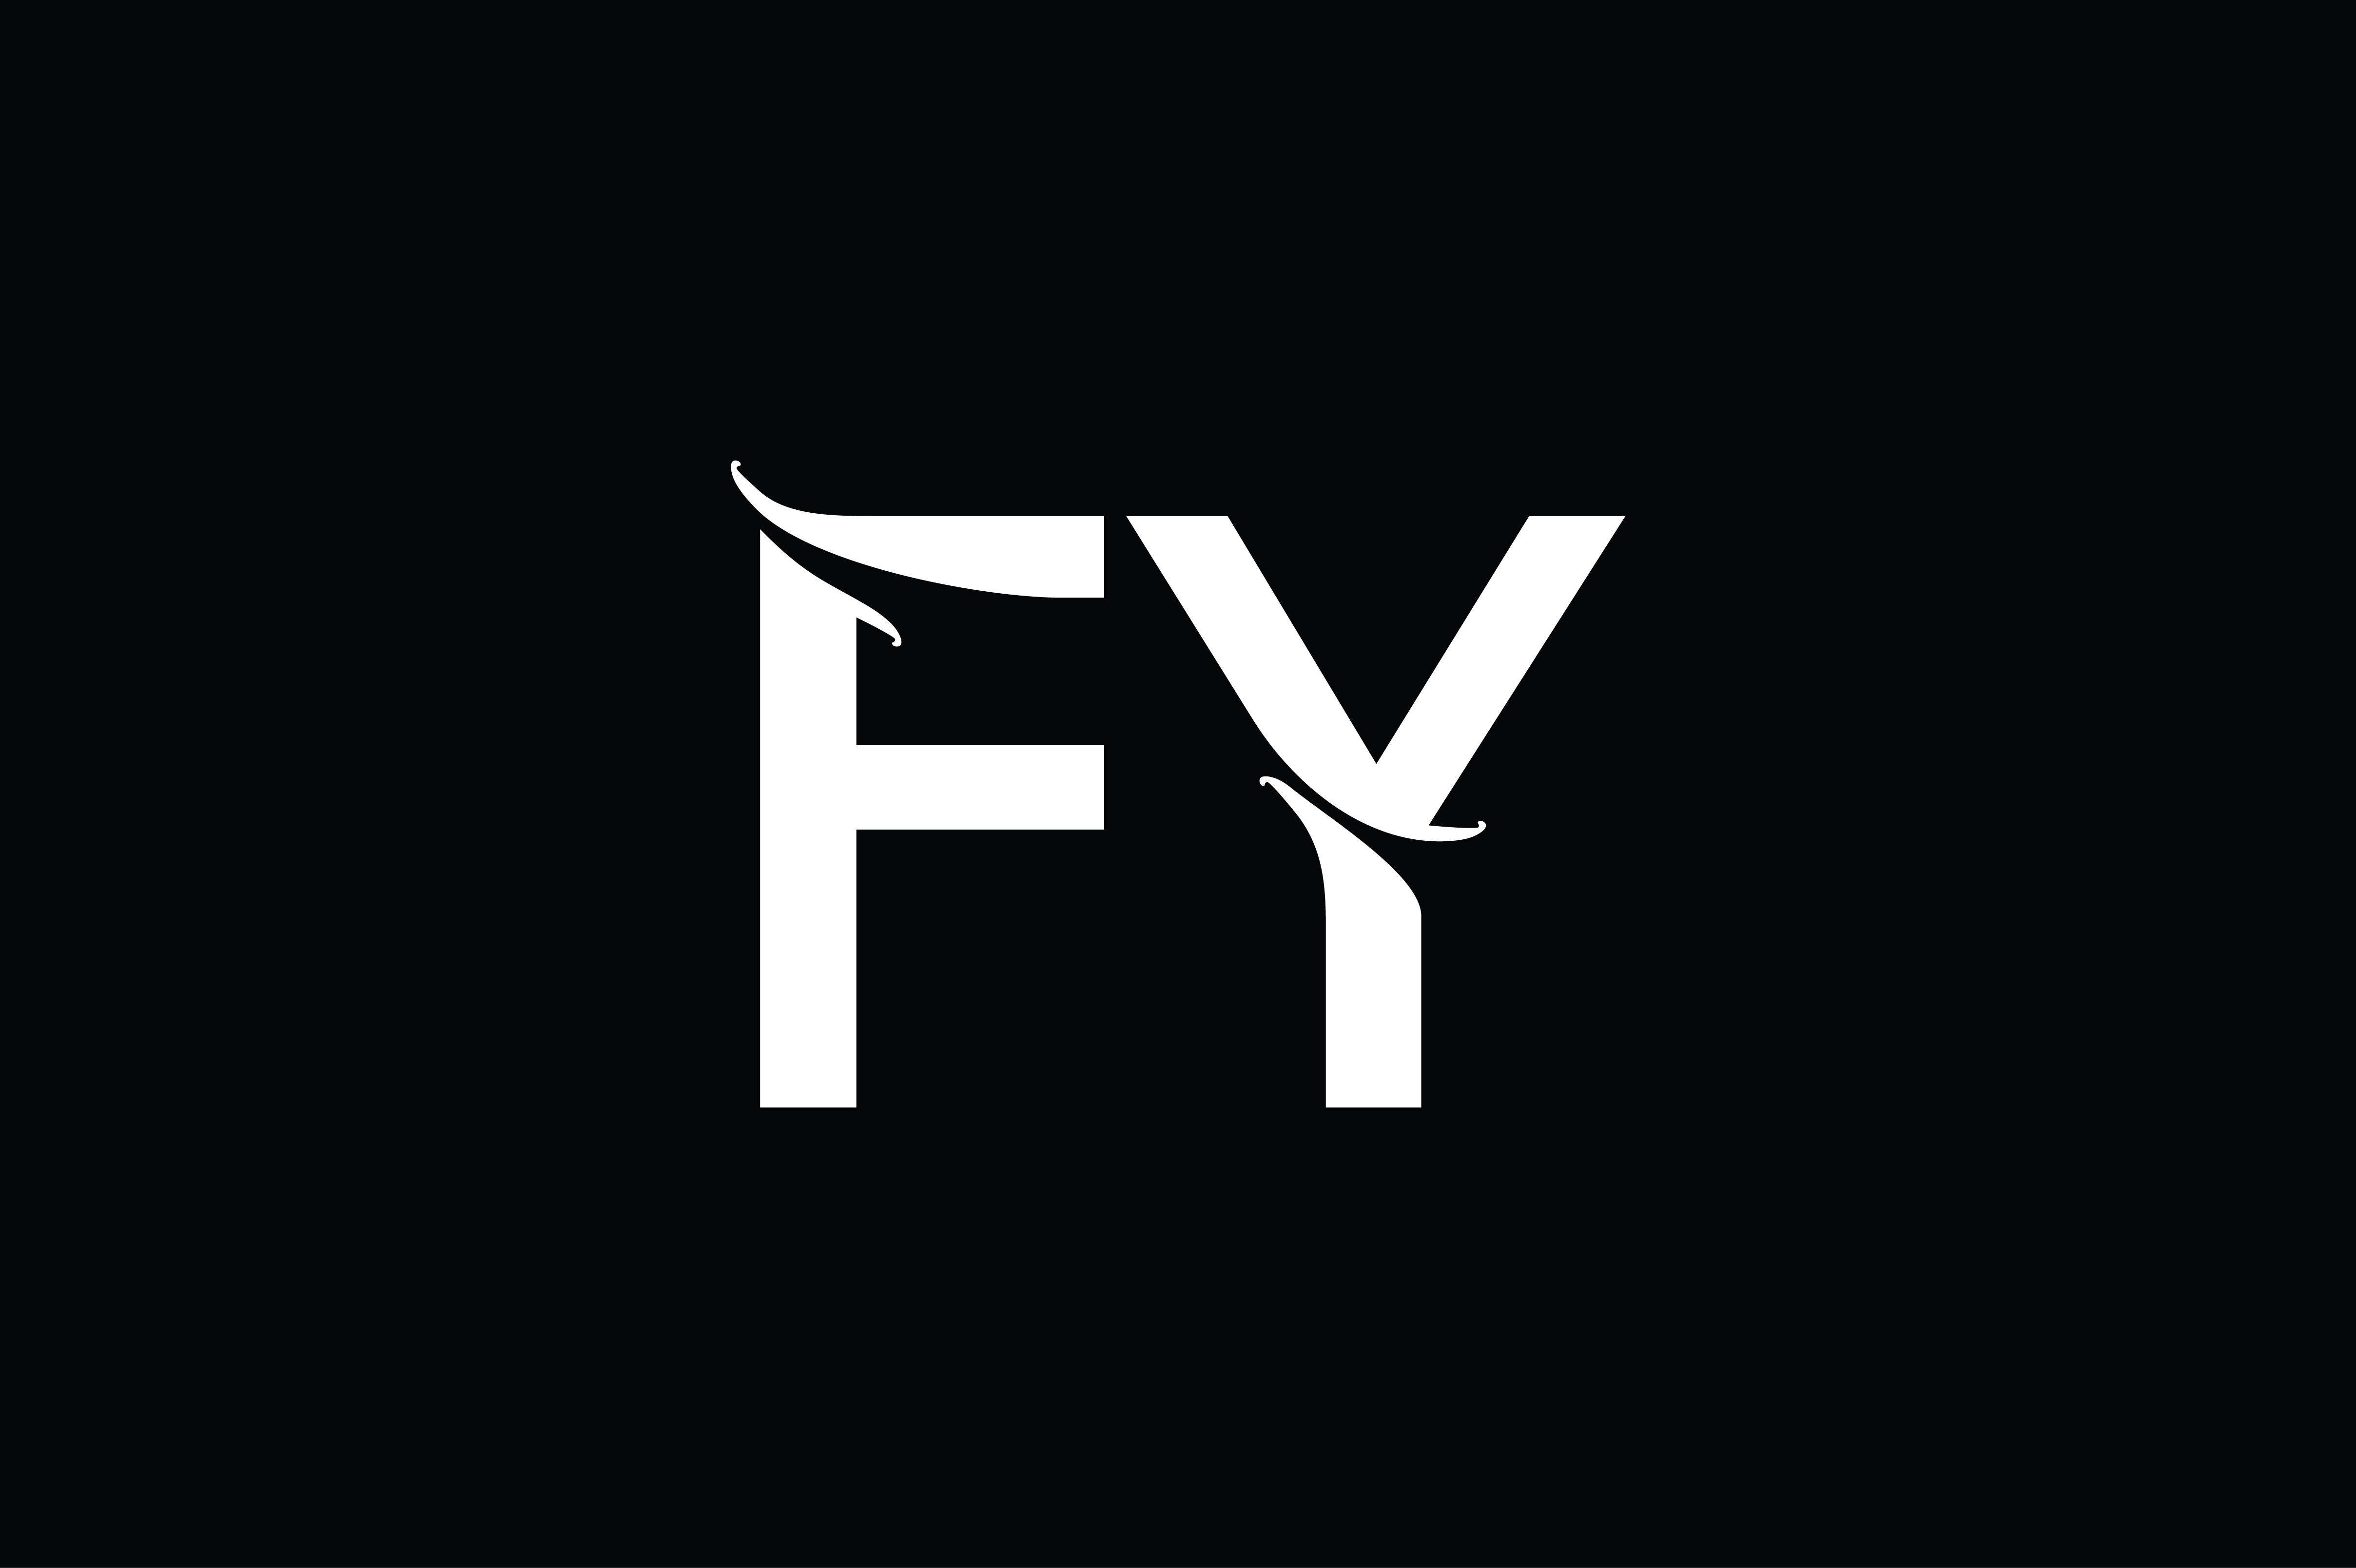 Fy Monogram Logo Design By Vectorseller Thehungryjpeg Com